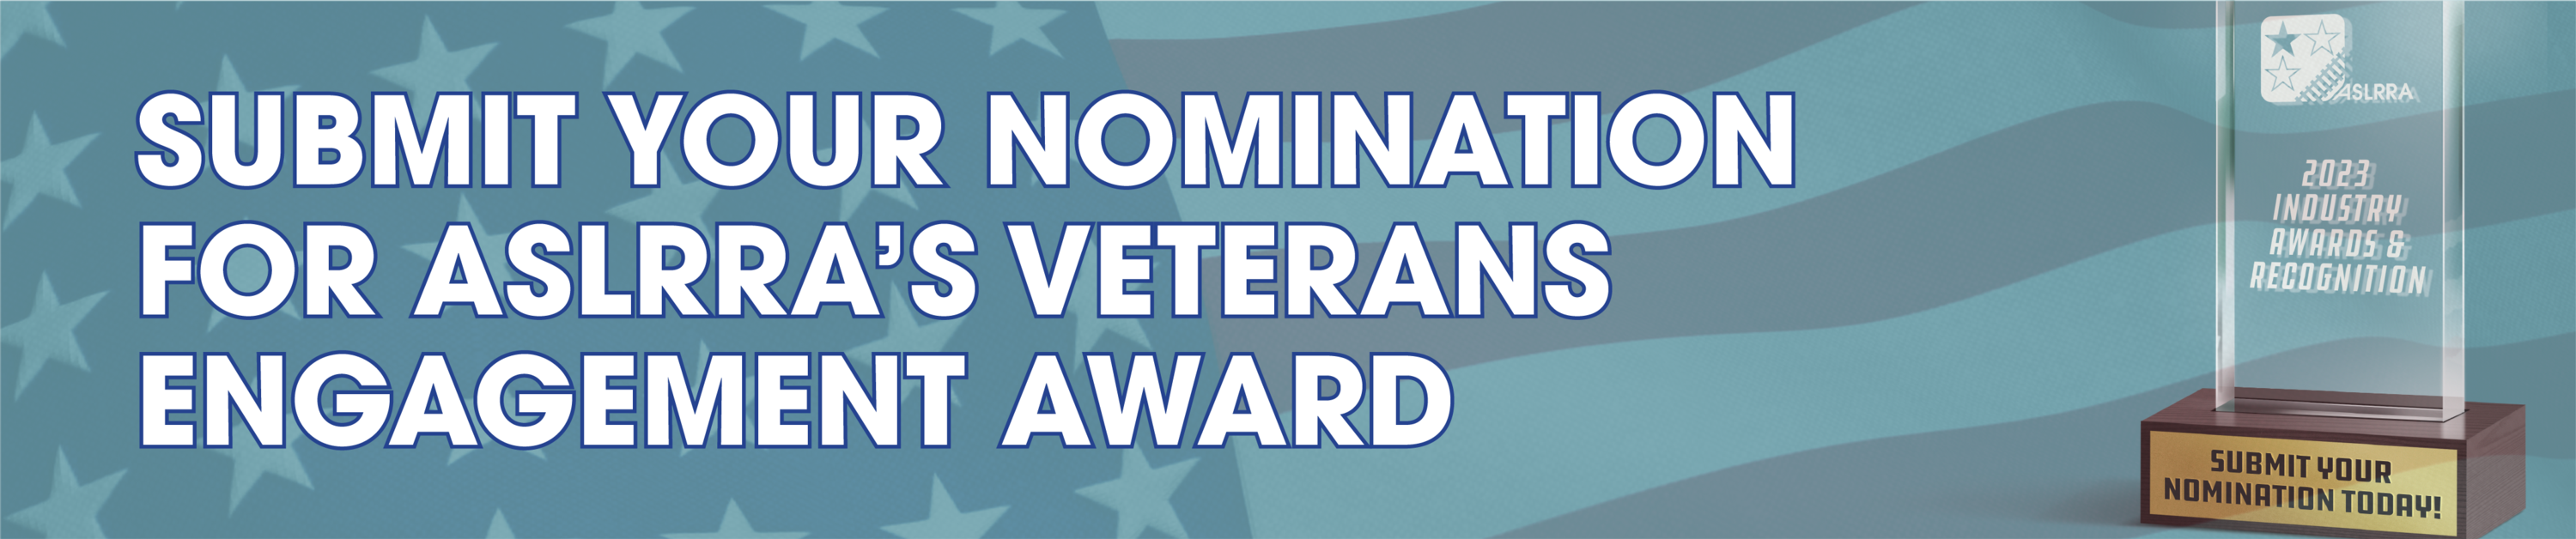 Veterans Engagement Award Ad